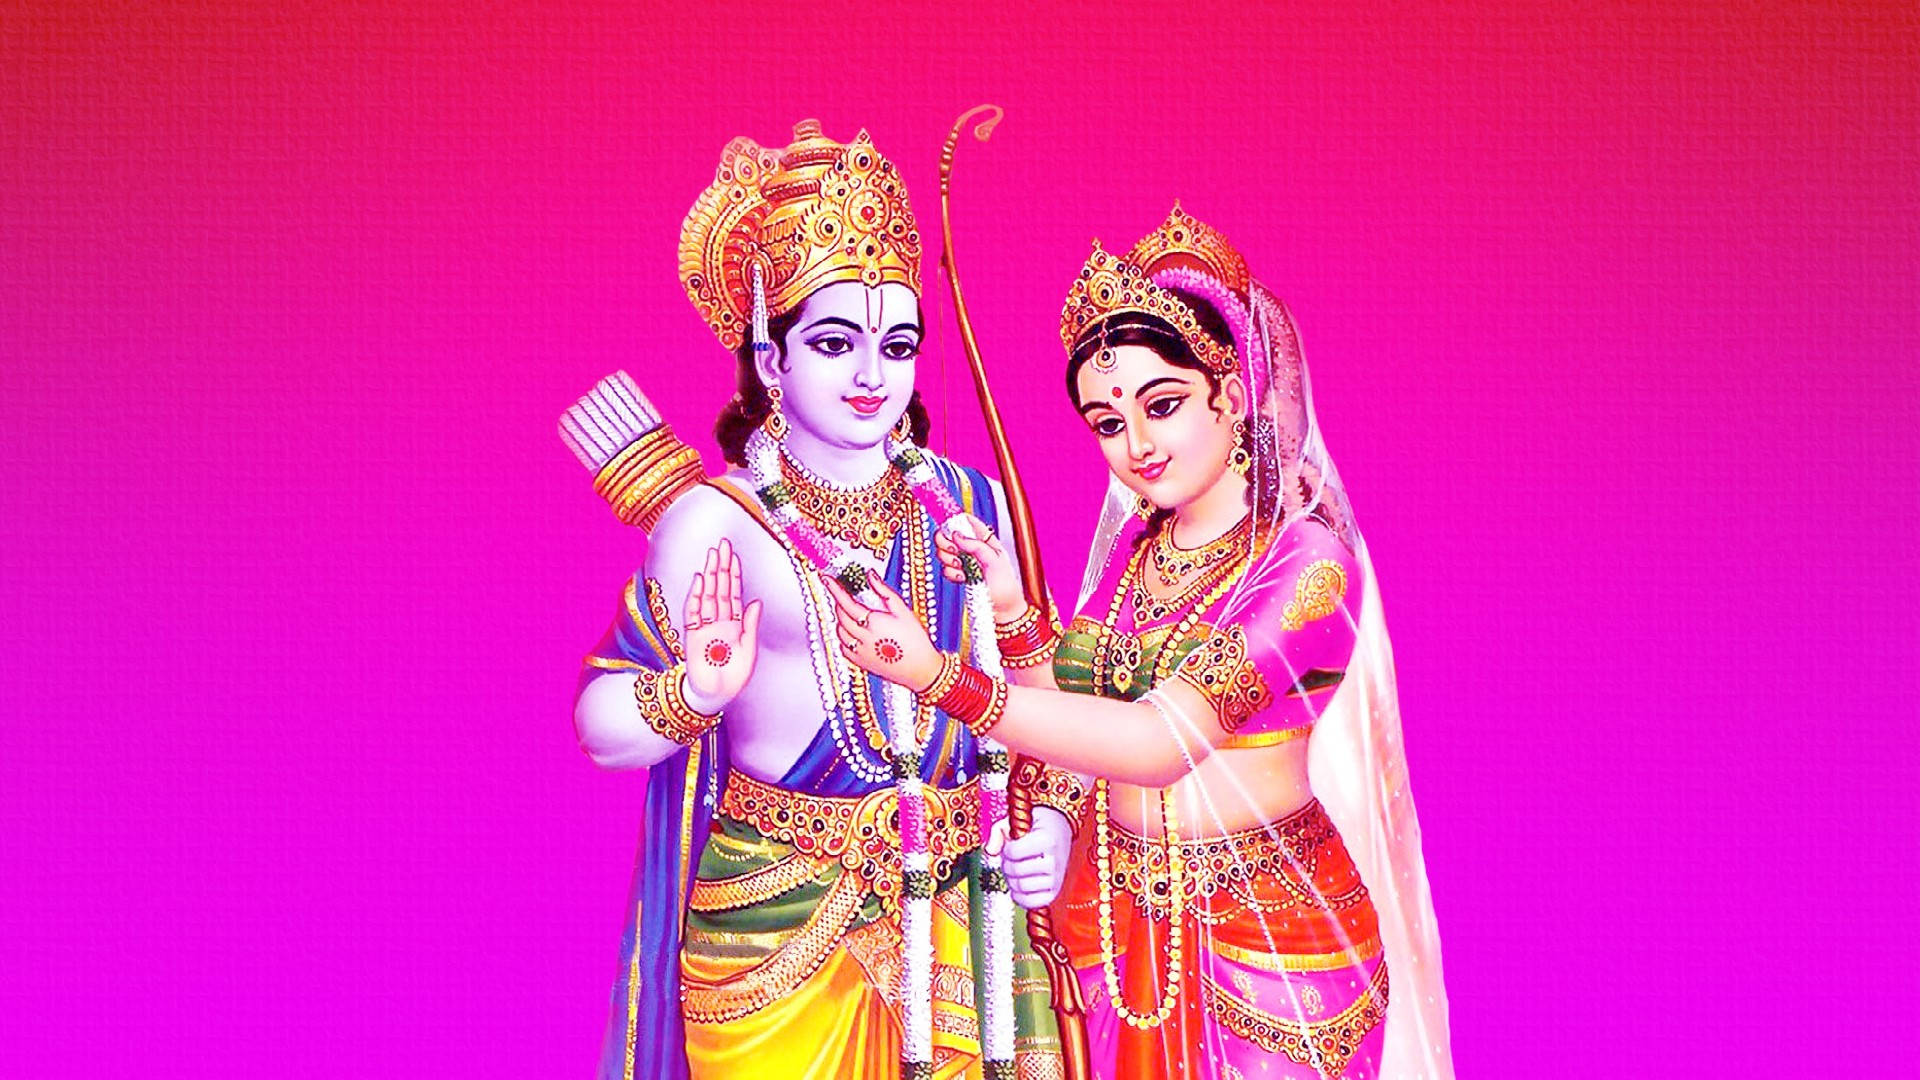 Ram Sita Reddish Pink Background Background